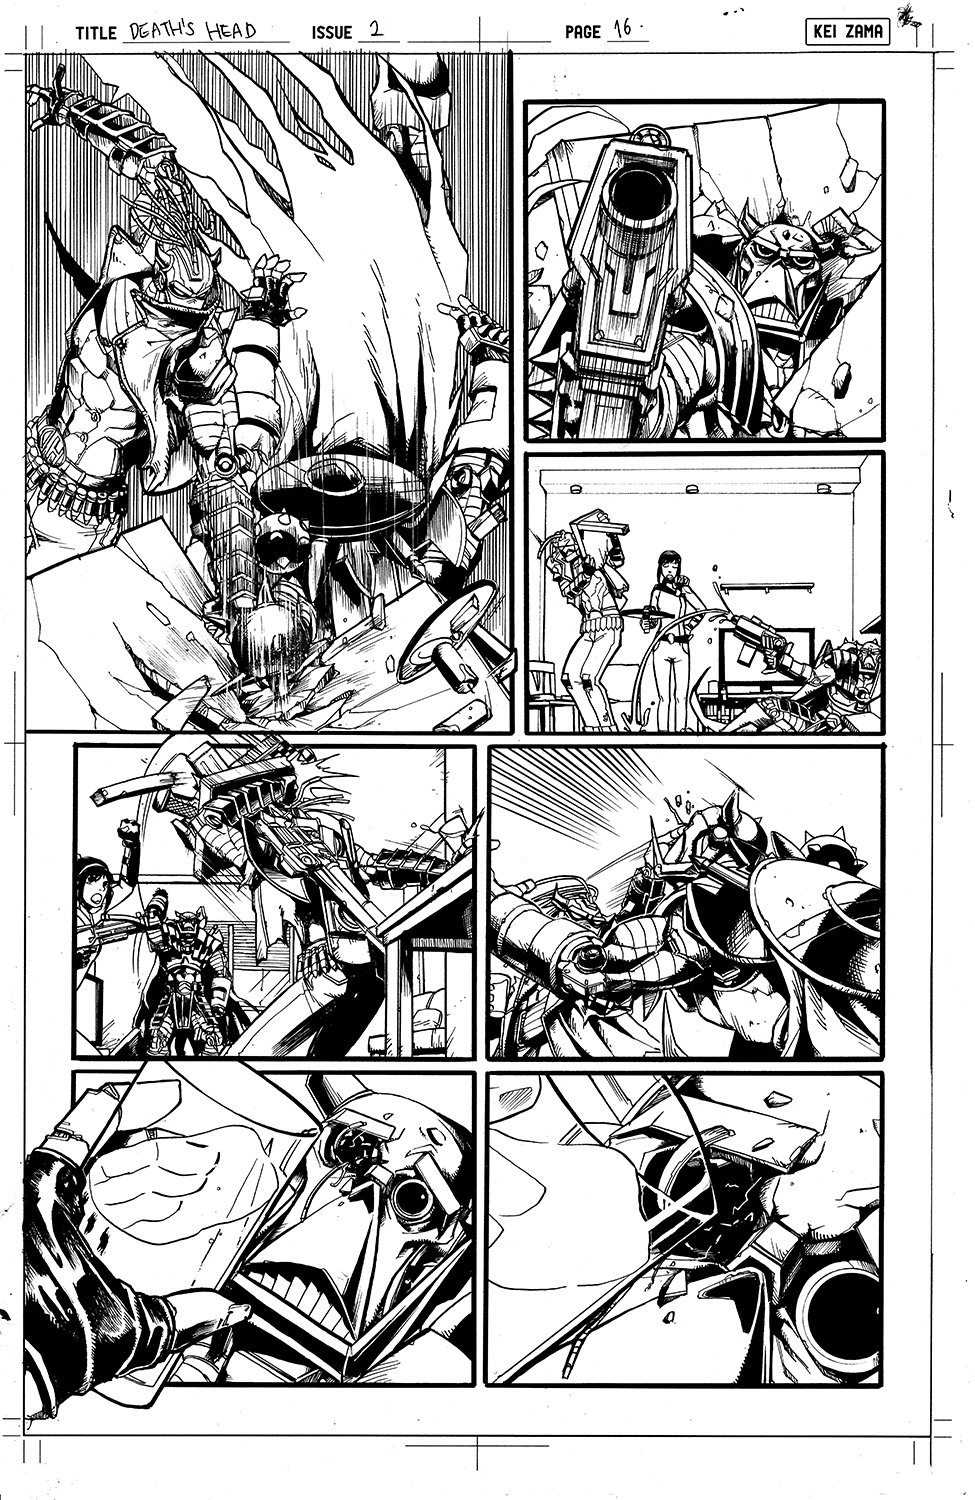 Death's Head #2 Page 16